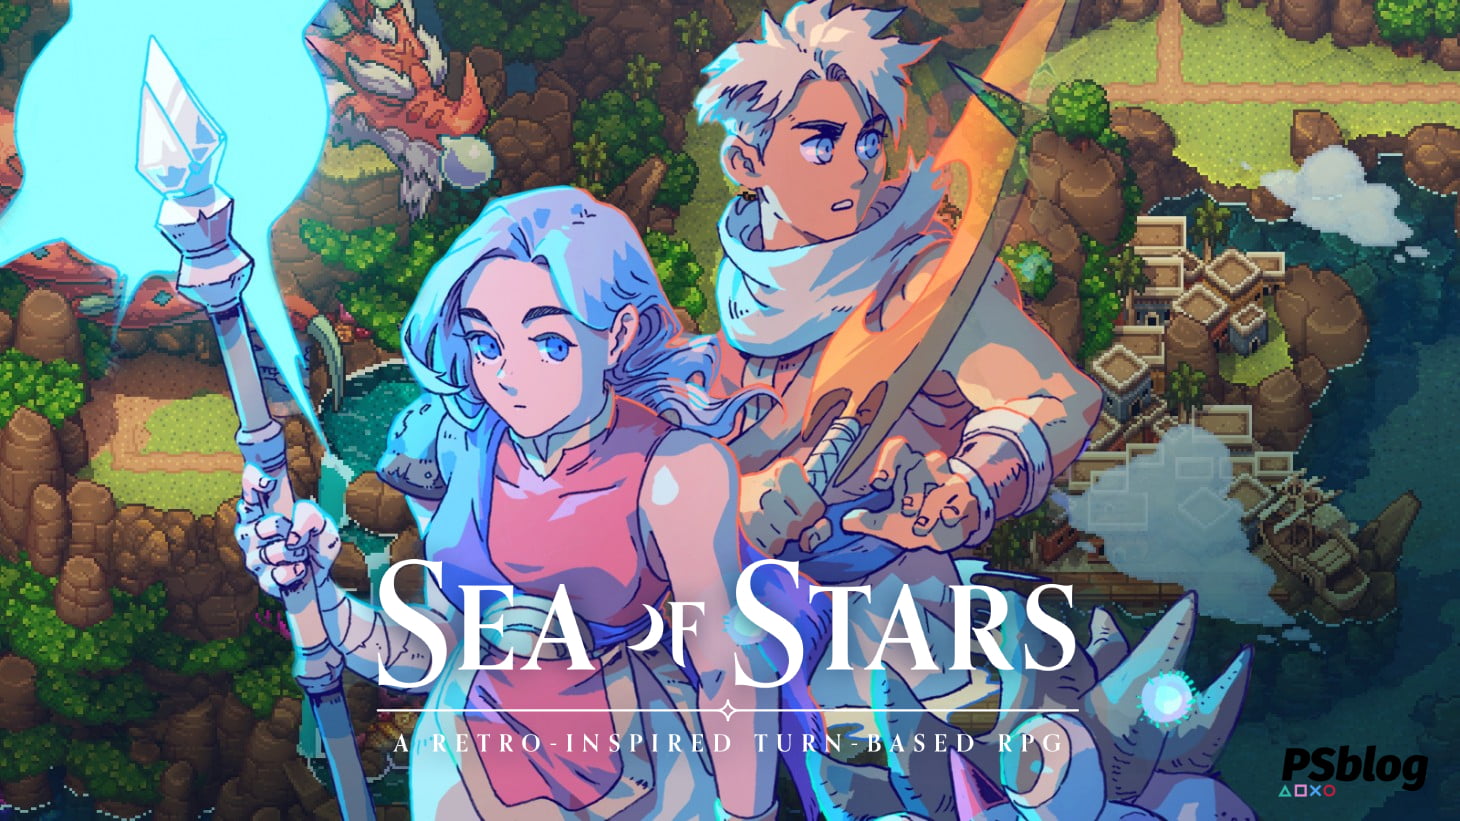 Sea of Stars, A retro-inspired turn-based RPG